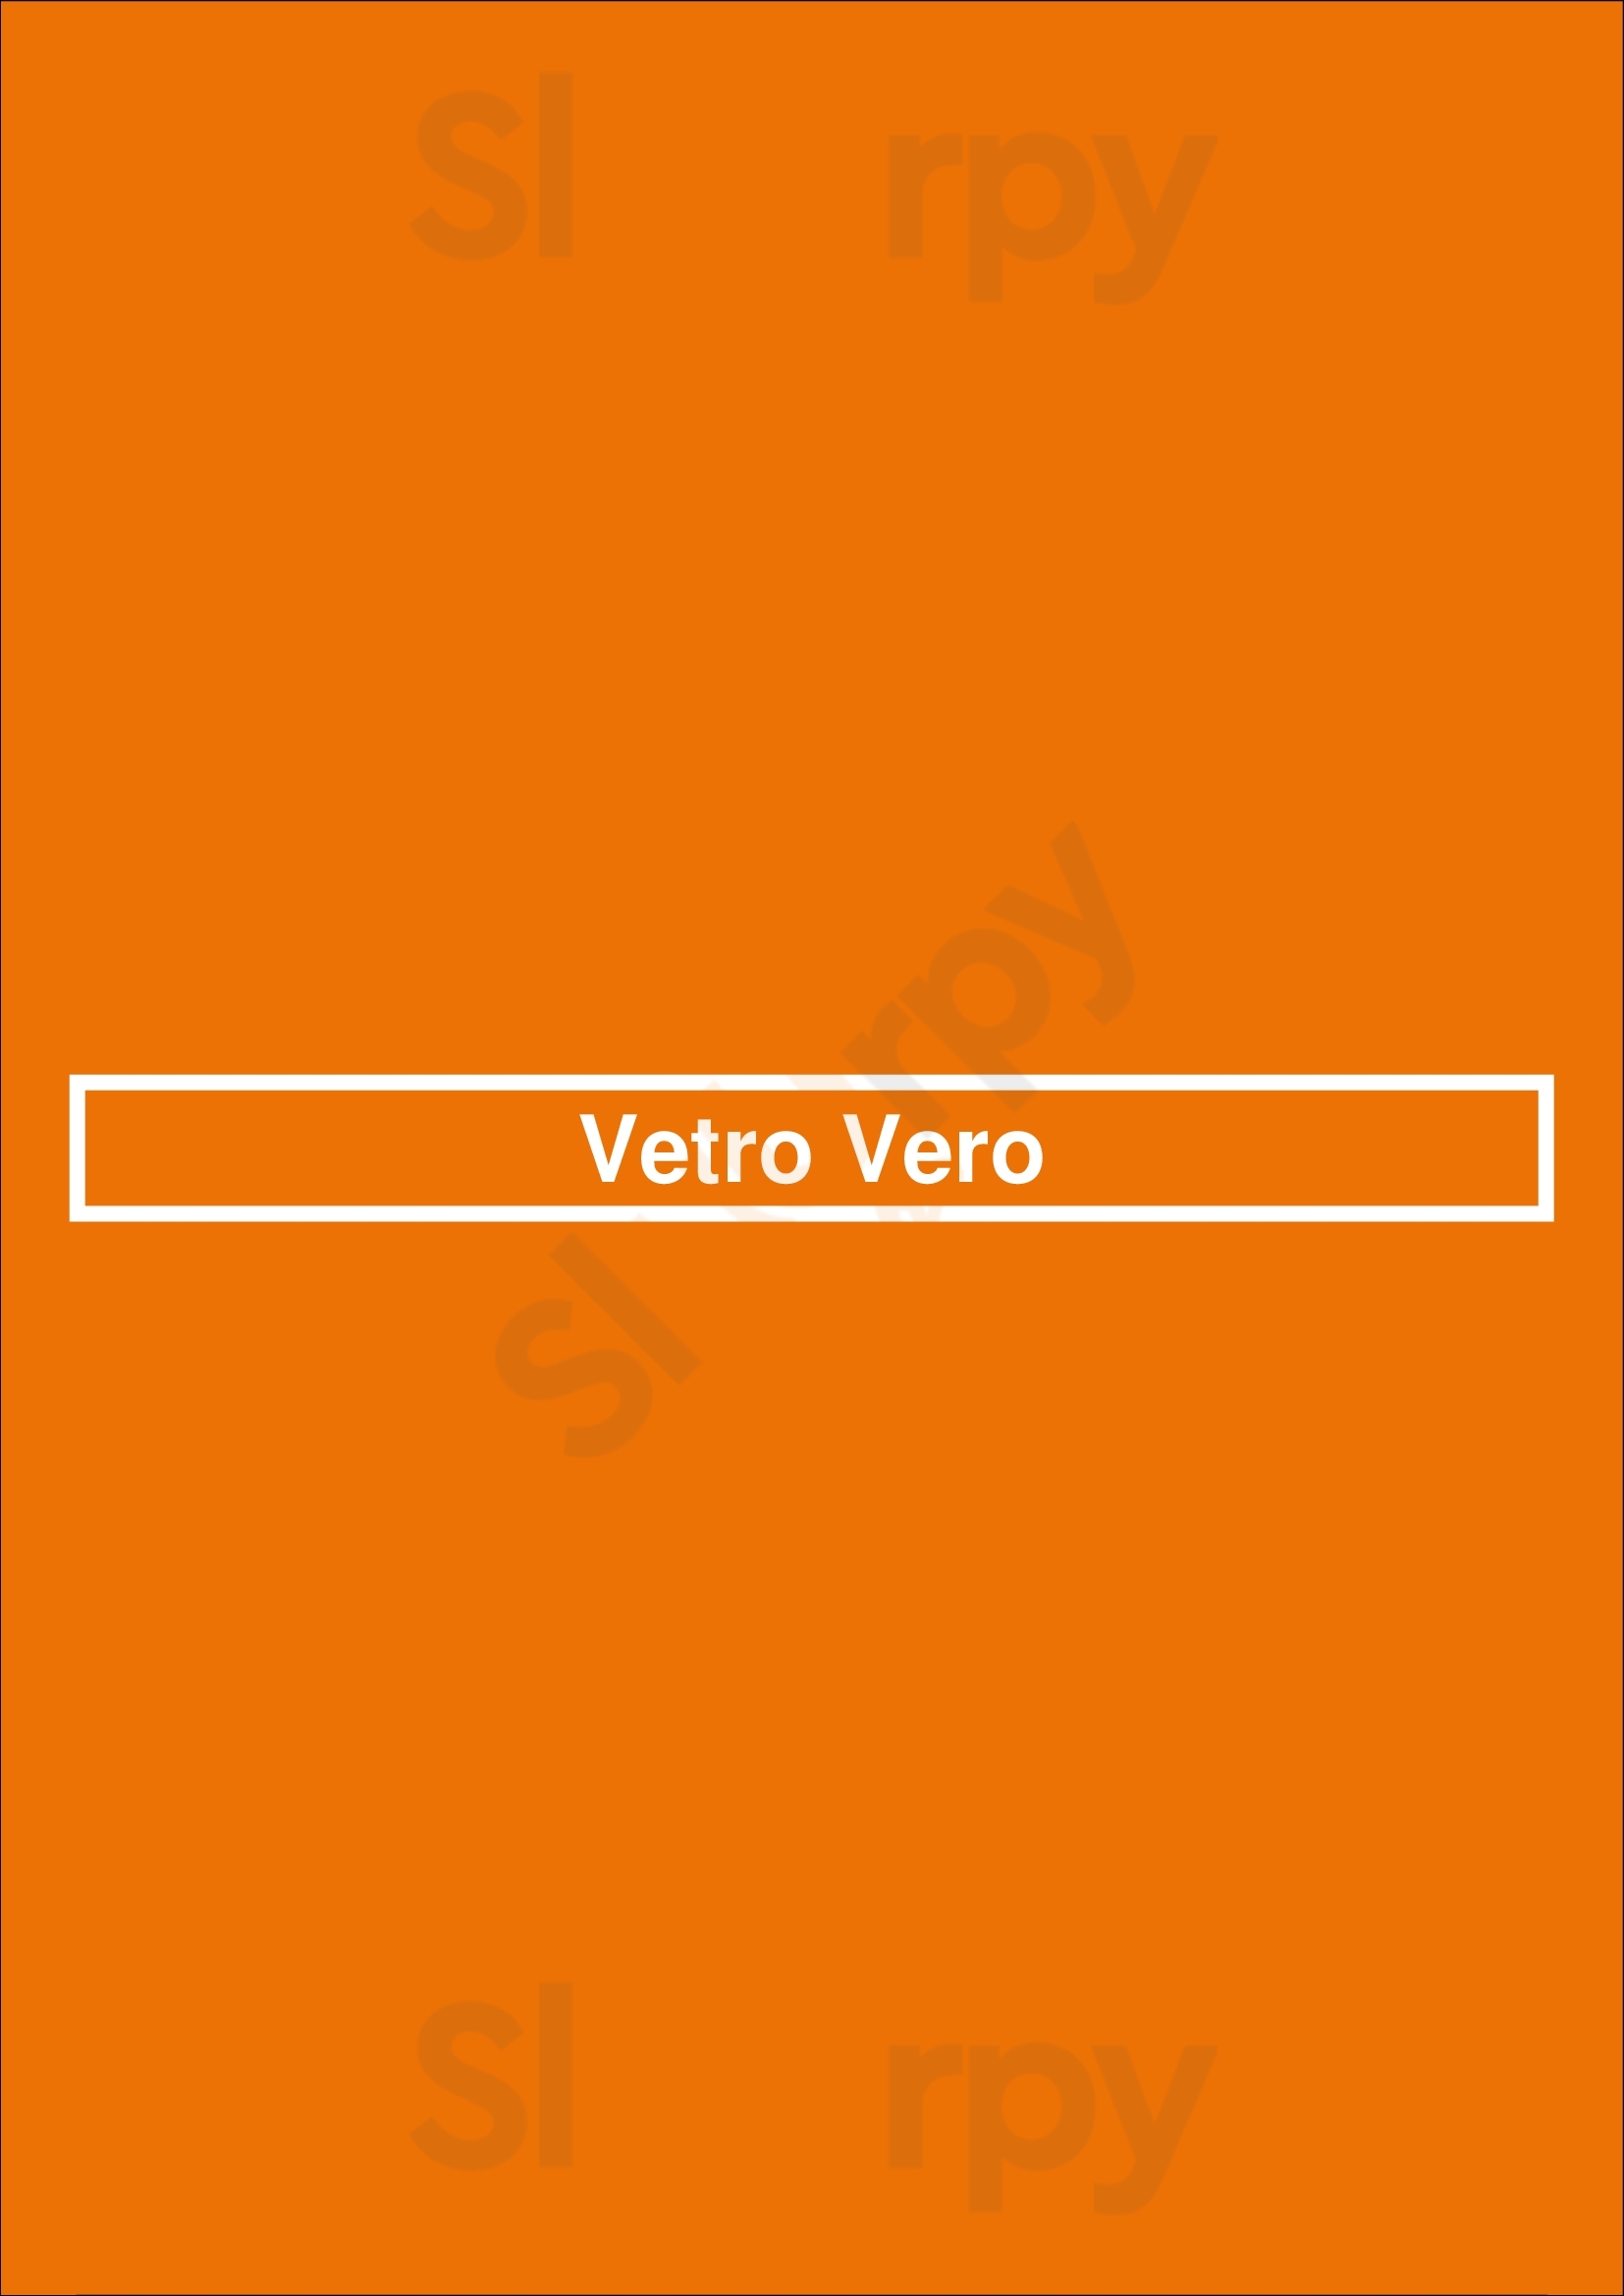 Vetro Vero Frankfurt am Main Menu - 1